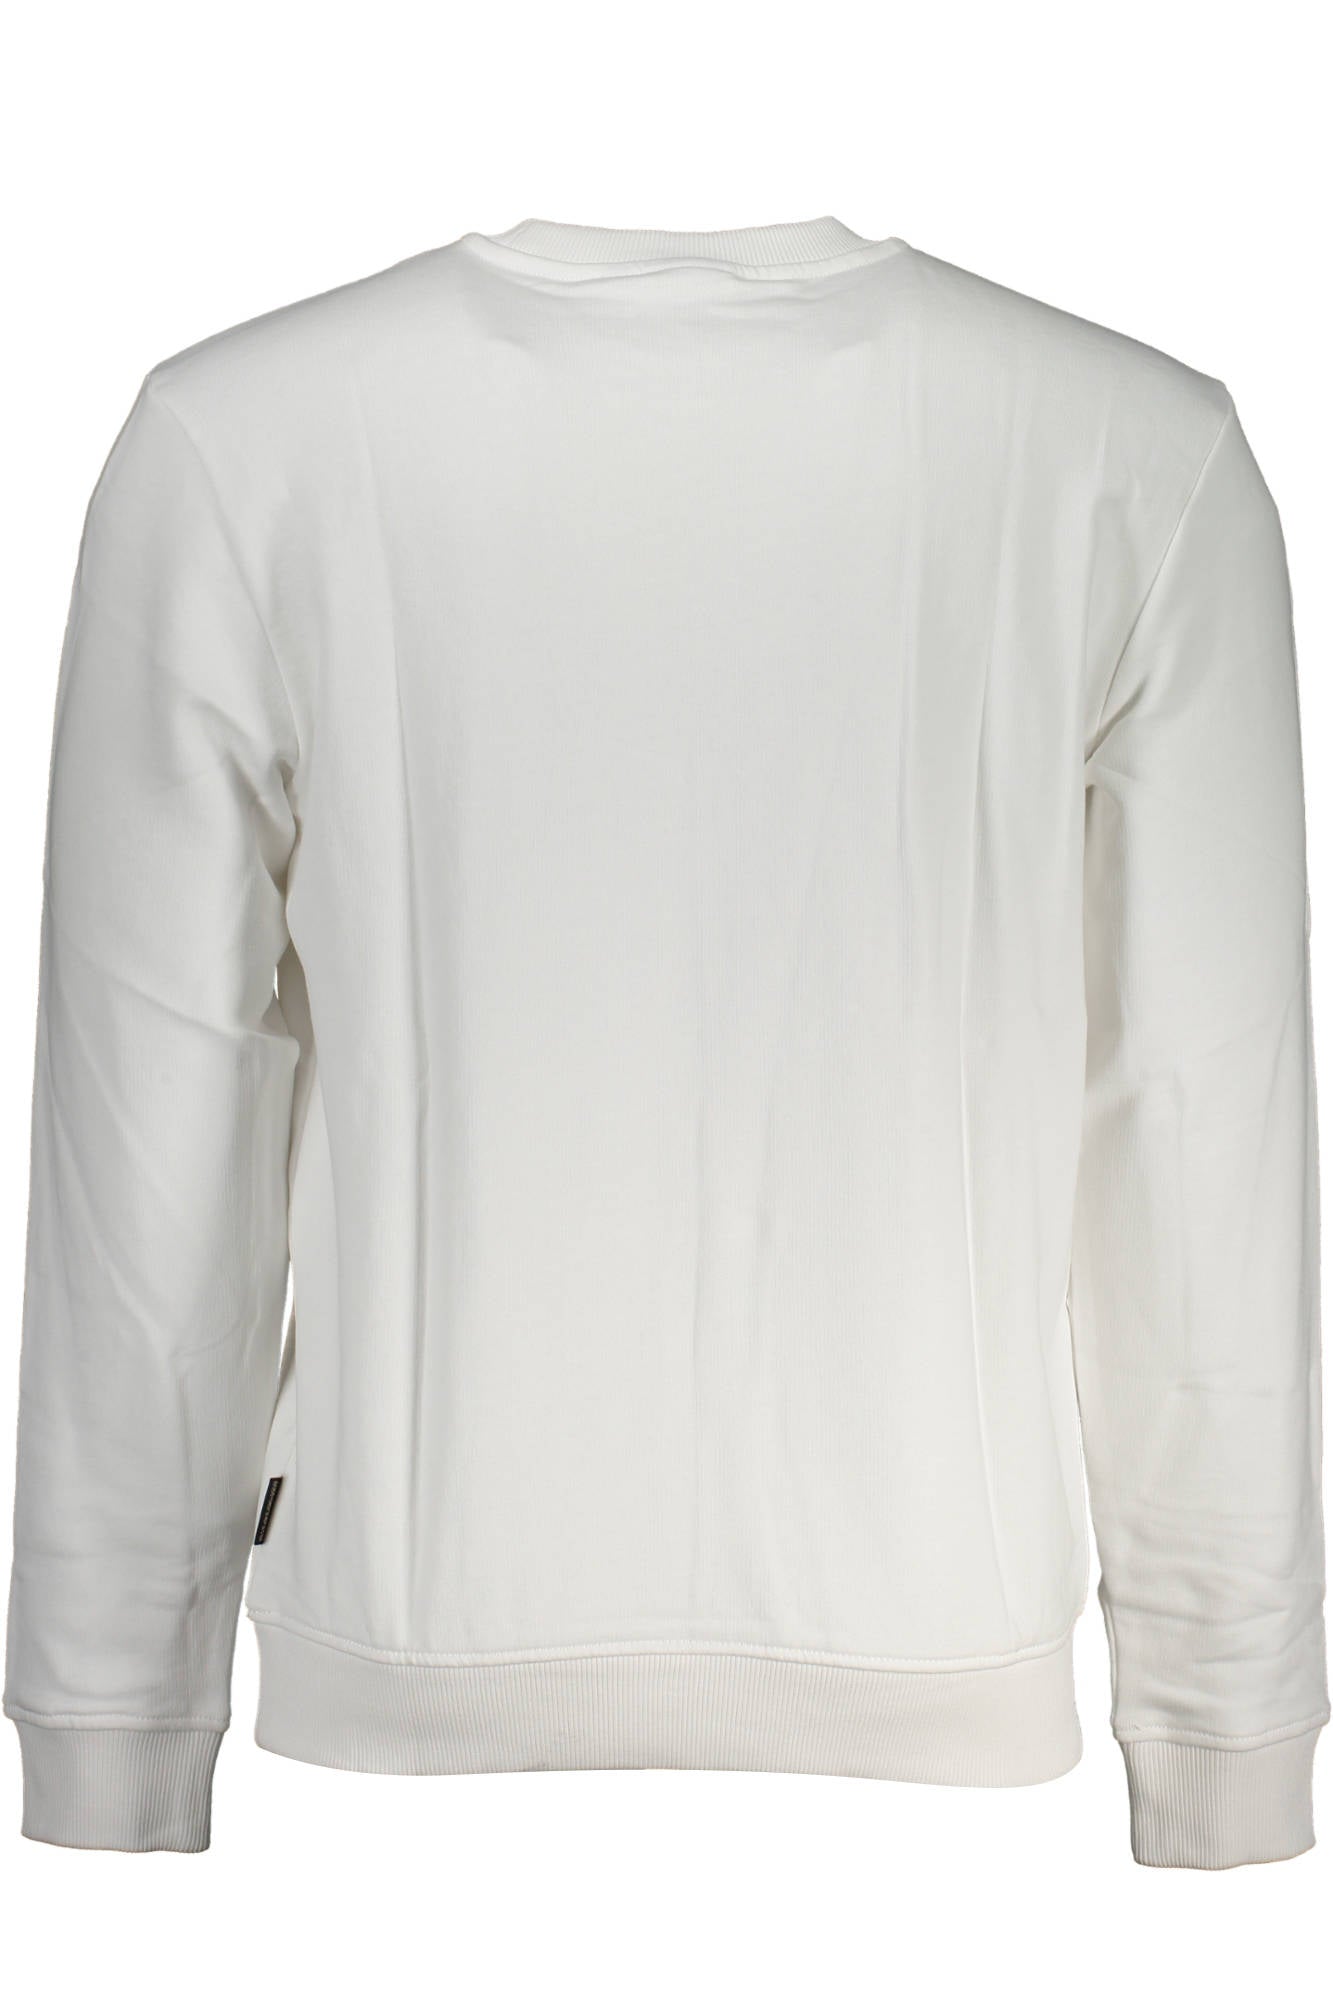 Napapijri White Cotton Sweater - Fizigo